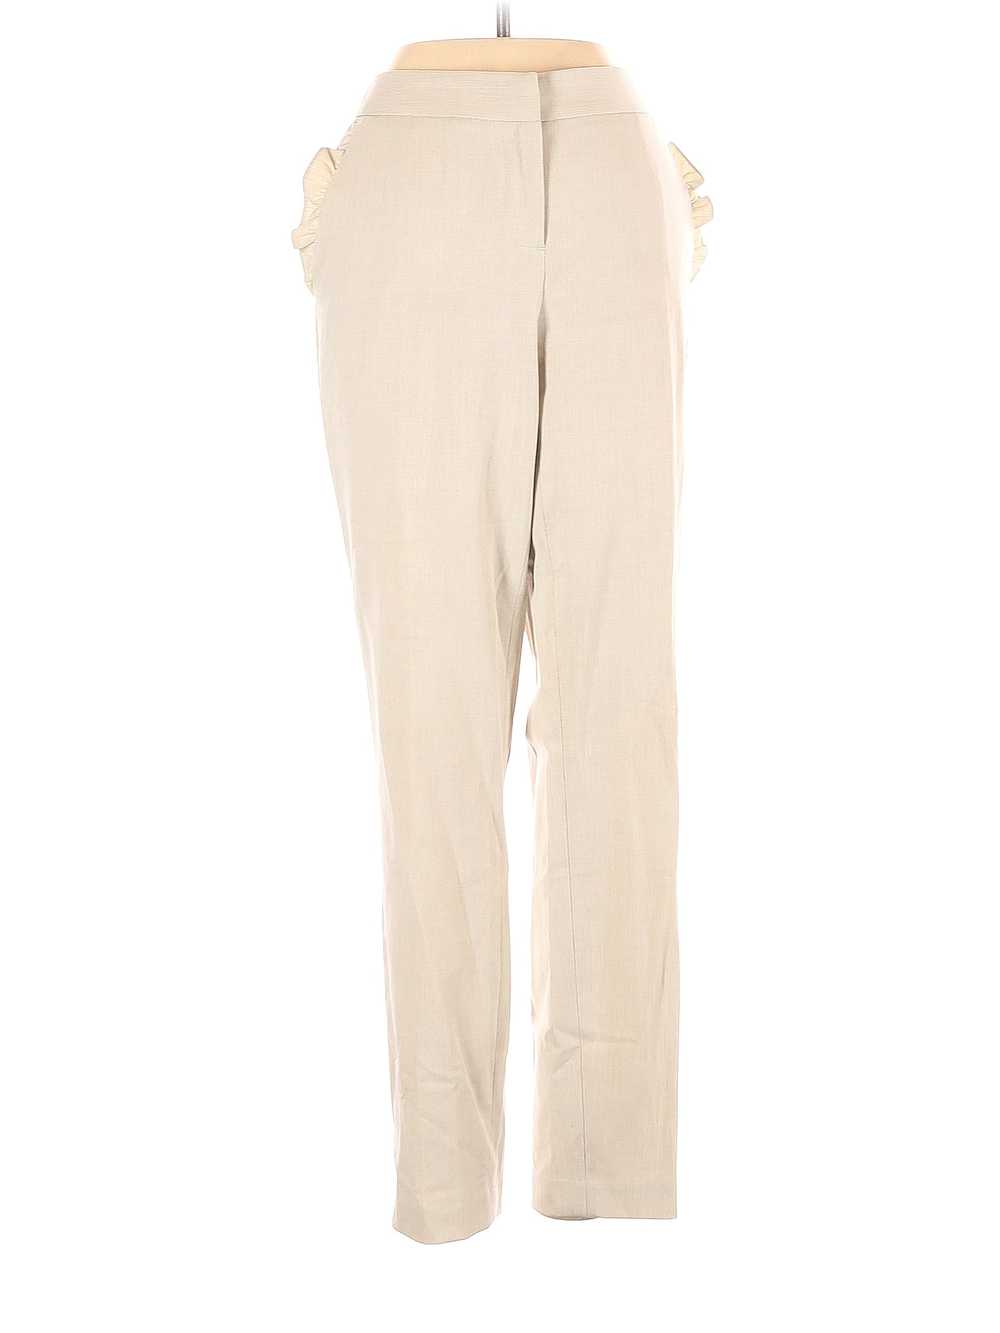 Cynthia Rowley Women Brown Casual Pants 4 - image 1